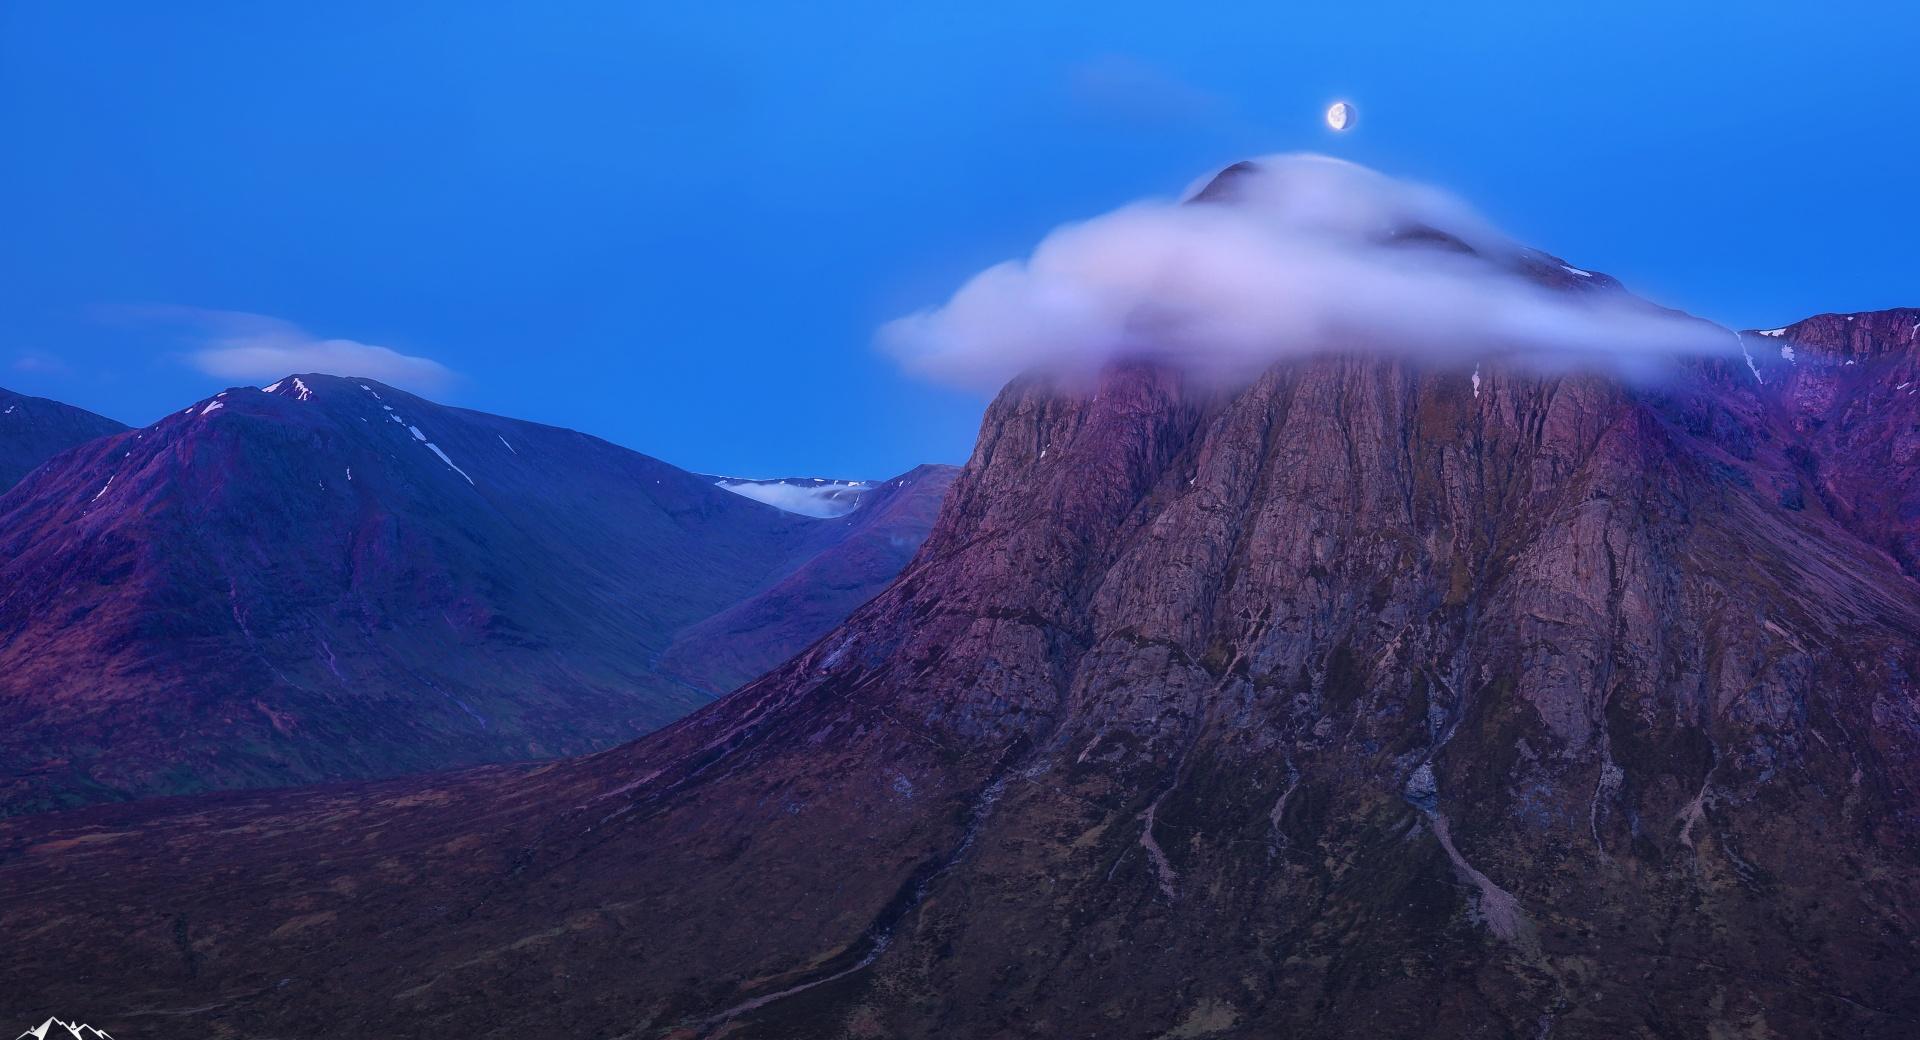 Beinn a Chrulaiste mountain, Scotland at 1280 x 960 size wallpapers HD quality